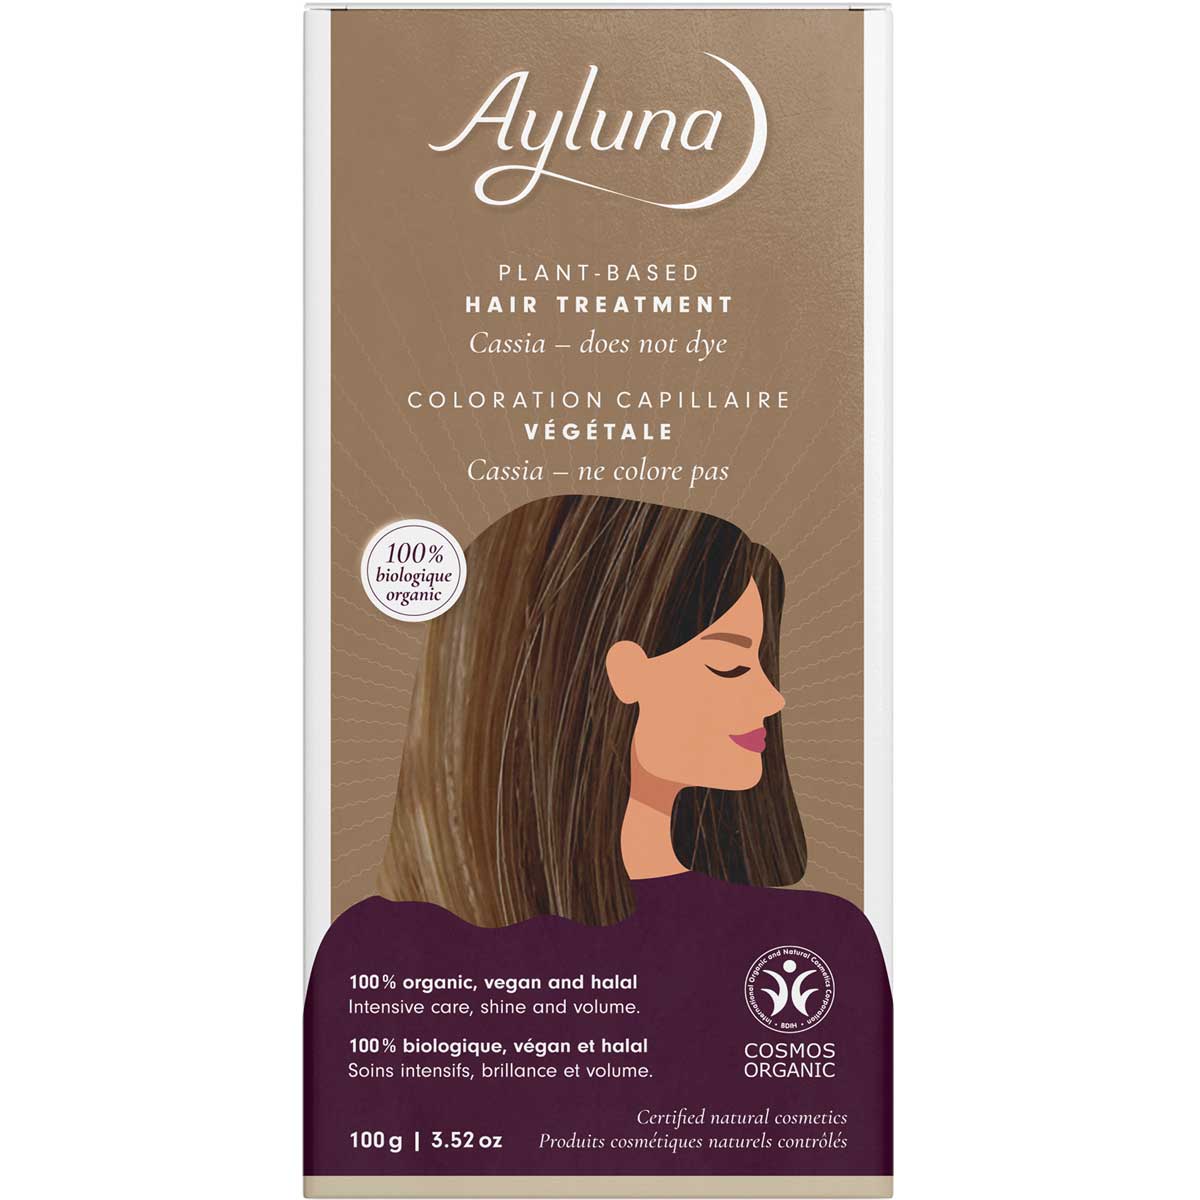 Ayluna Cassia Plant-Based Hair Treatment 100g